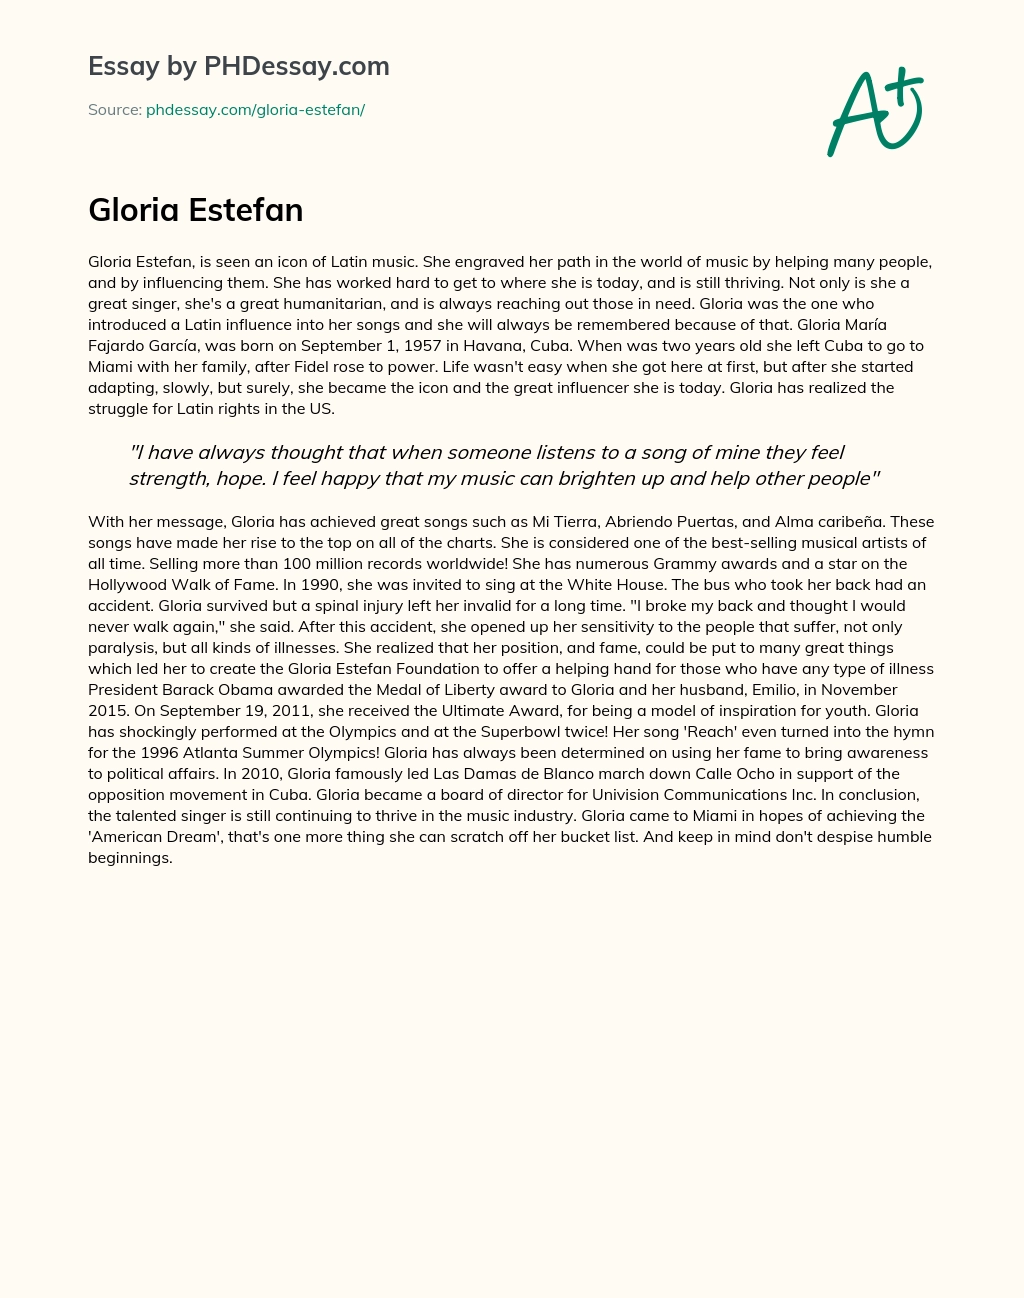 Gloria Estefan essay